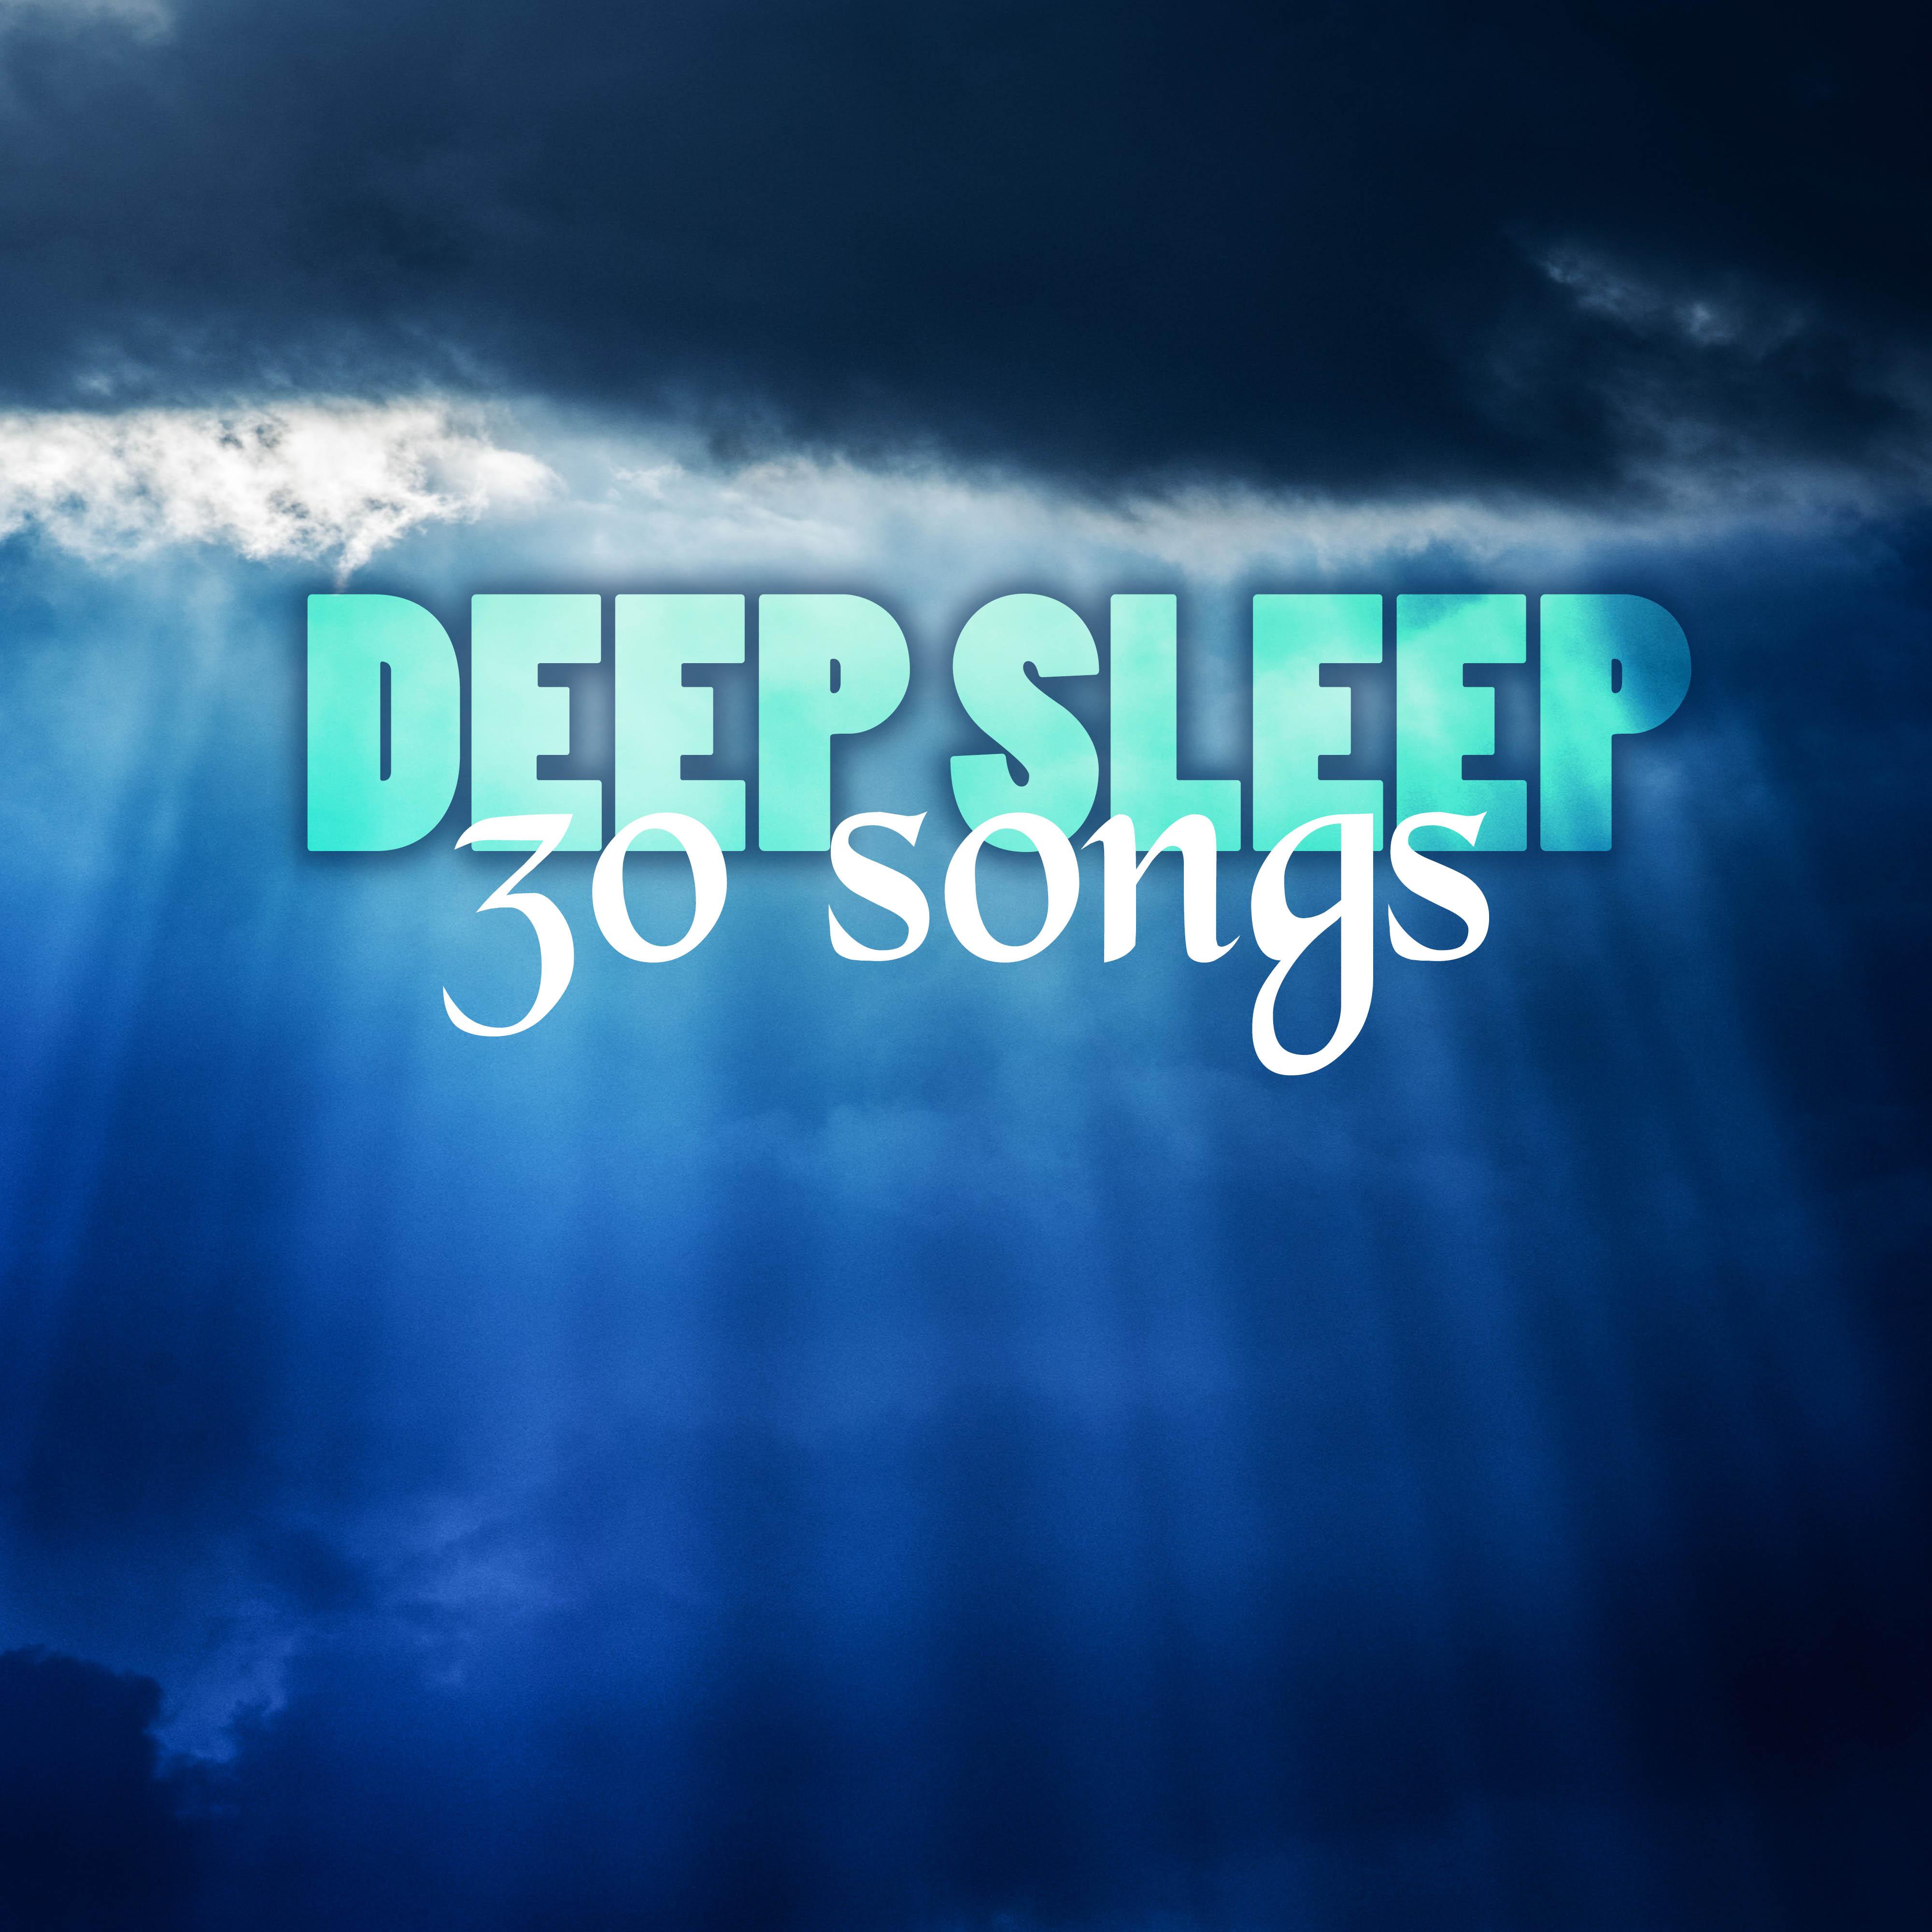 Deep Sleep Relaxation Songs - Top 30